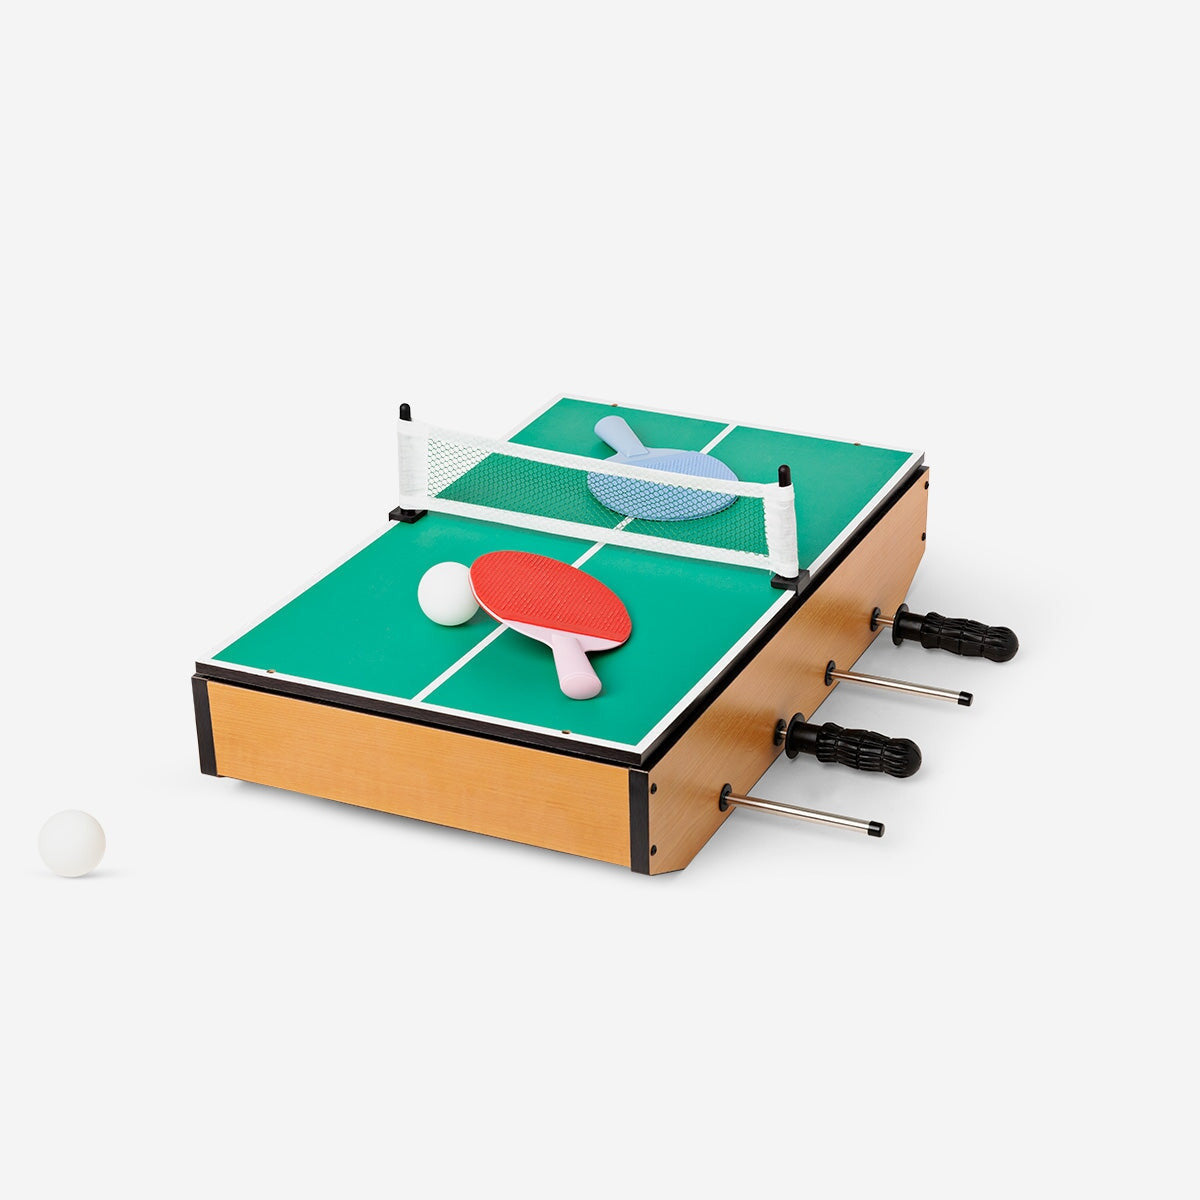 cdn./ta/bl/table-soccer-d.jpg?width